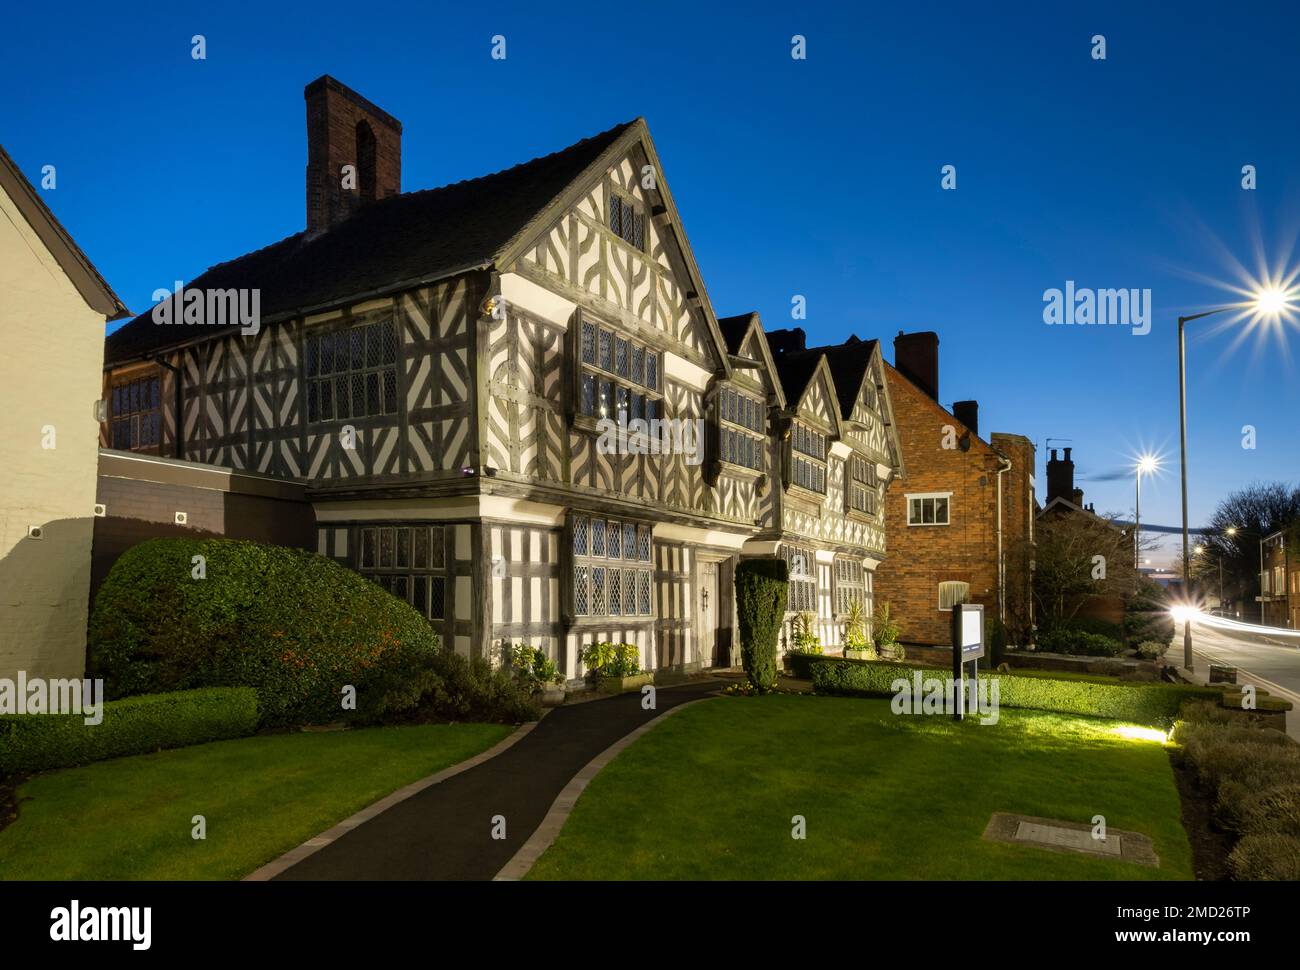 Churches Mansion at Night, Hospital Street, Nantwich, Cheshire, England, UK Stockfoto